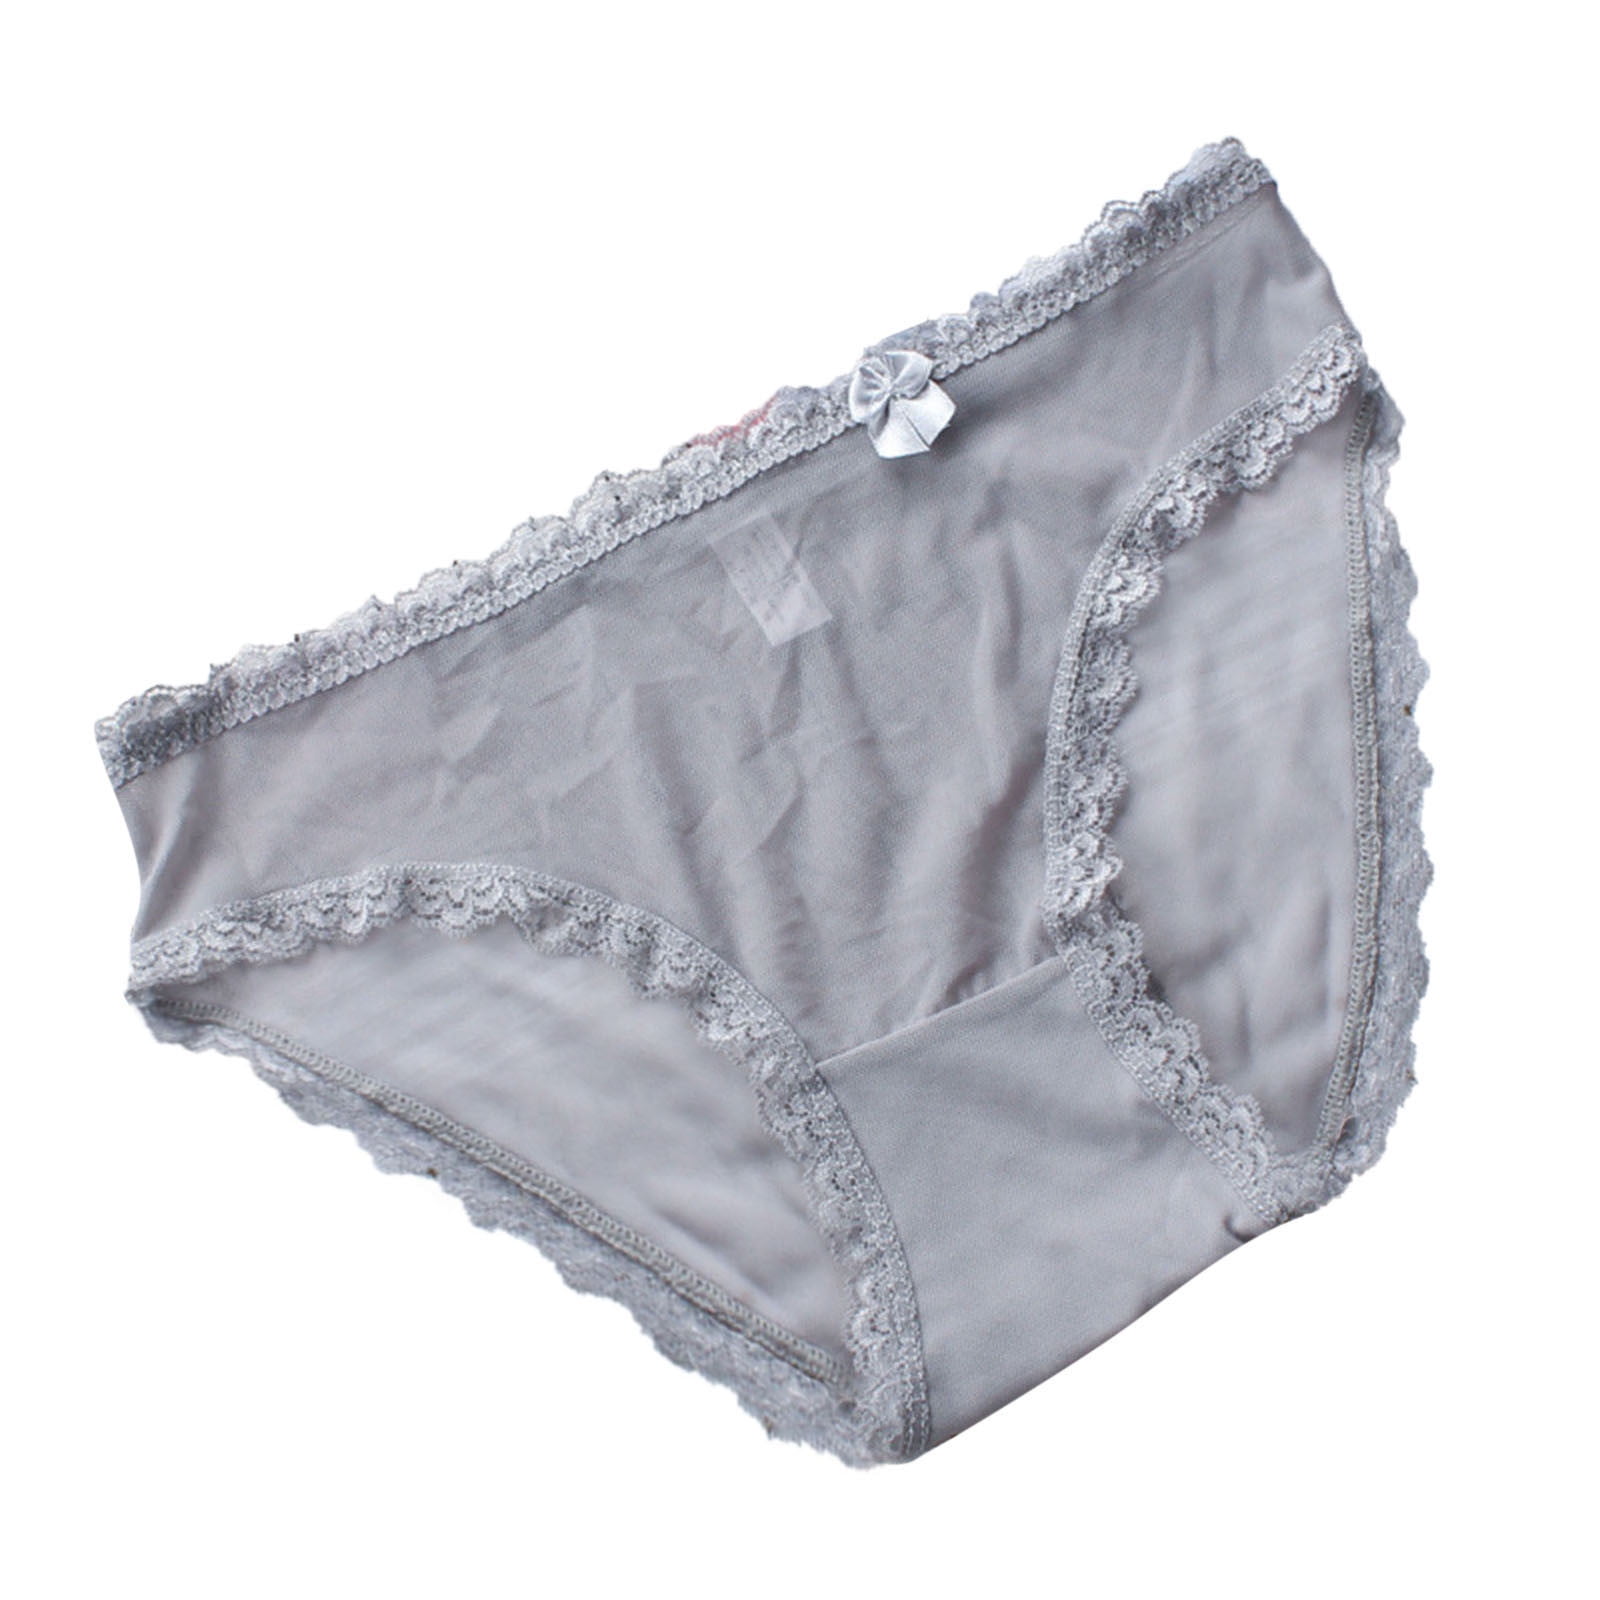 Puntoco Plus Size Underwear Clearance Women Sexy Lingerie Lace